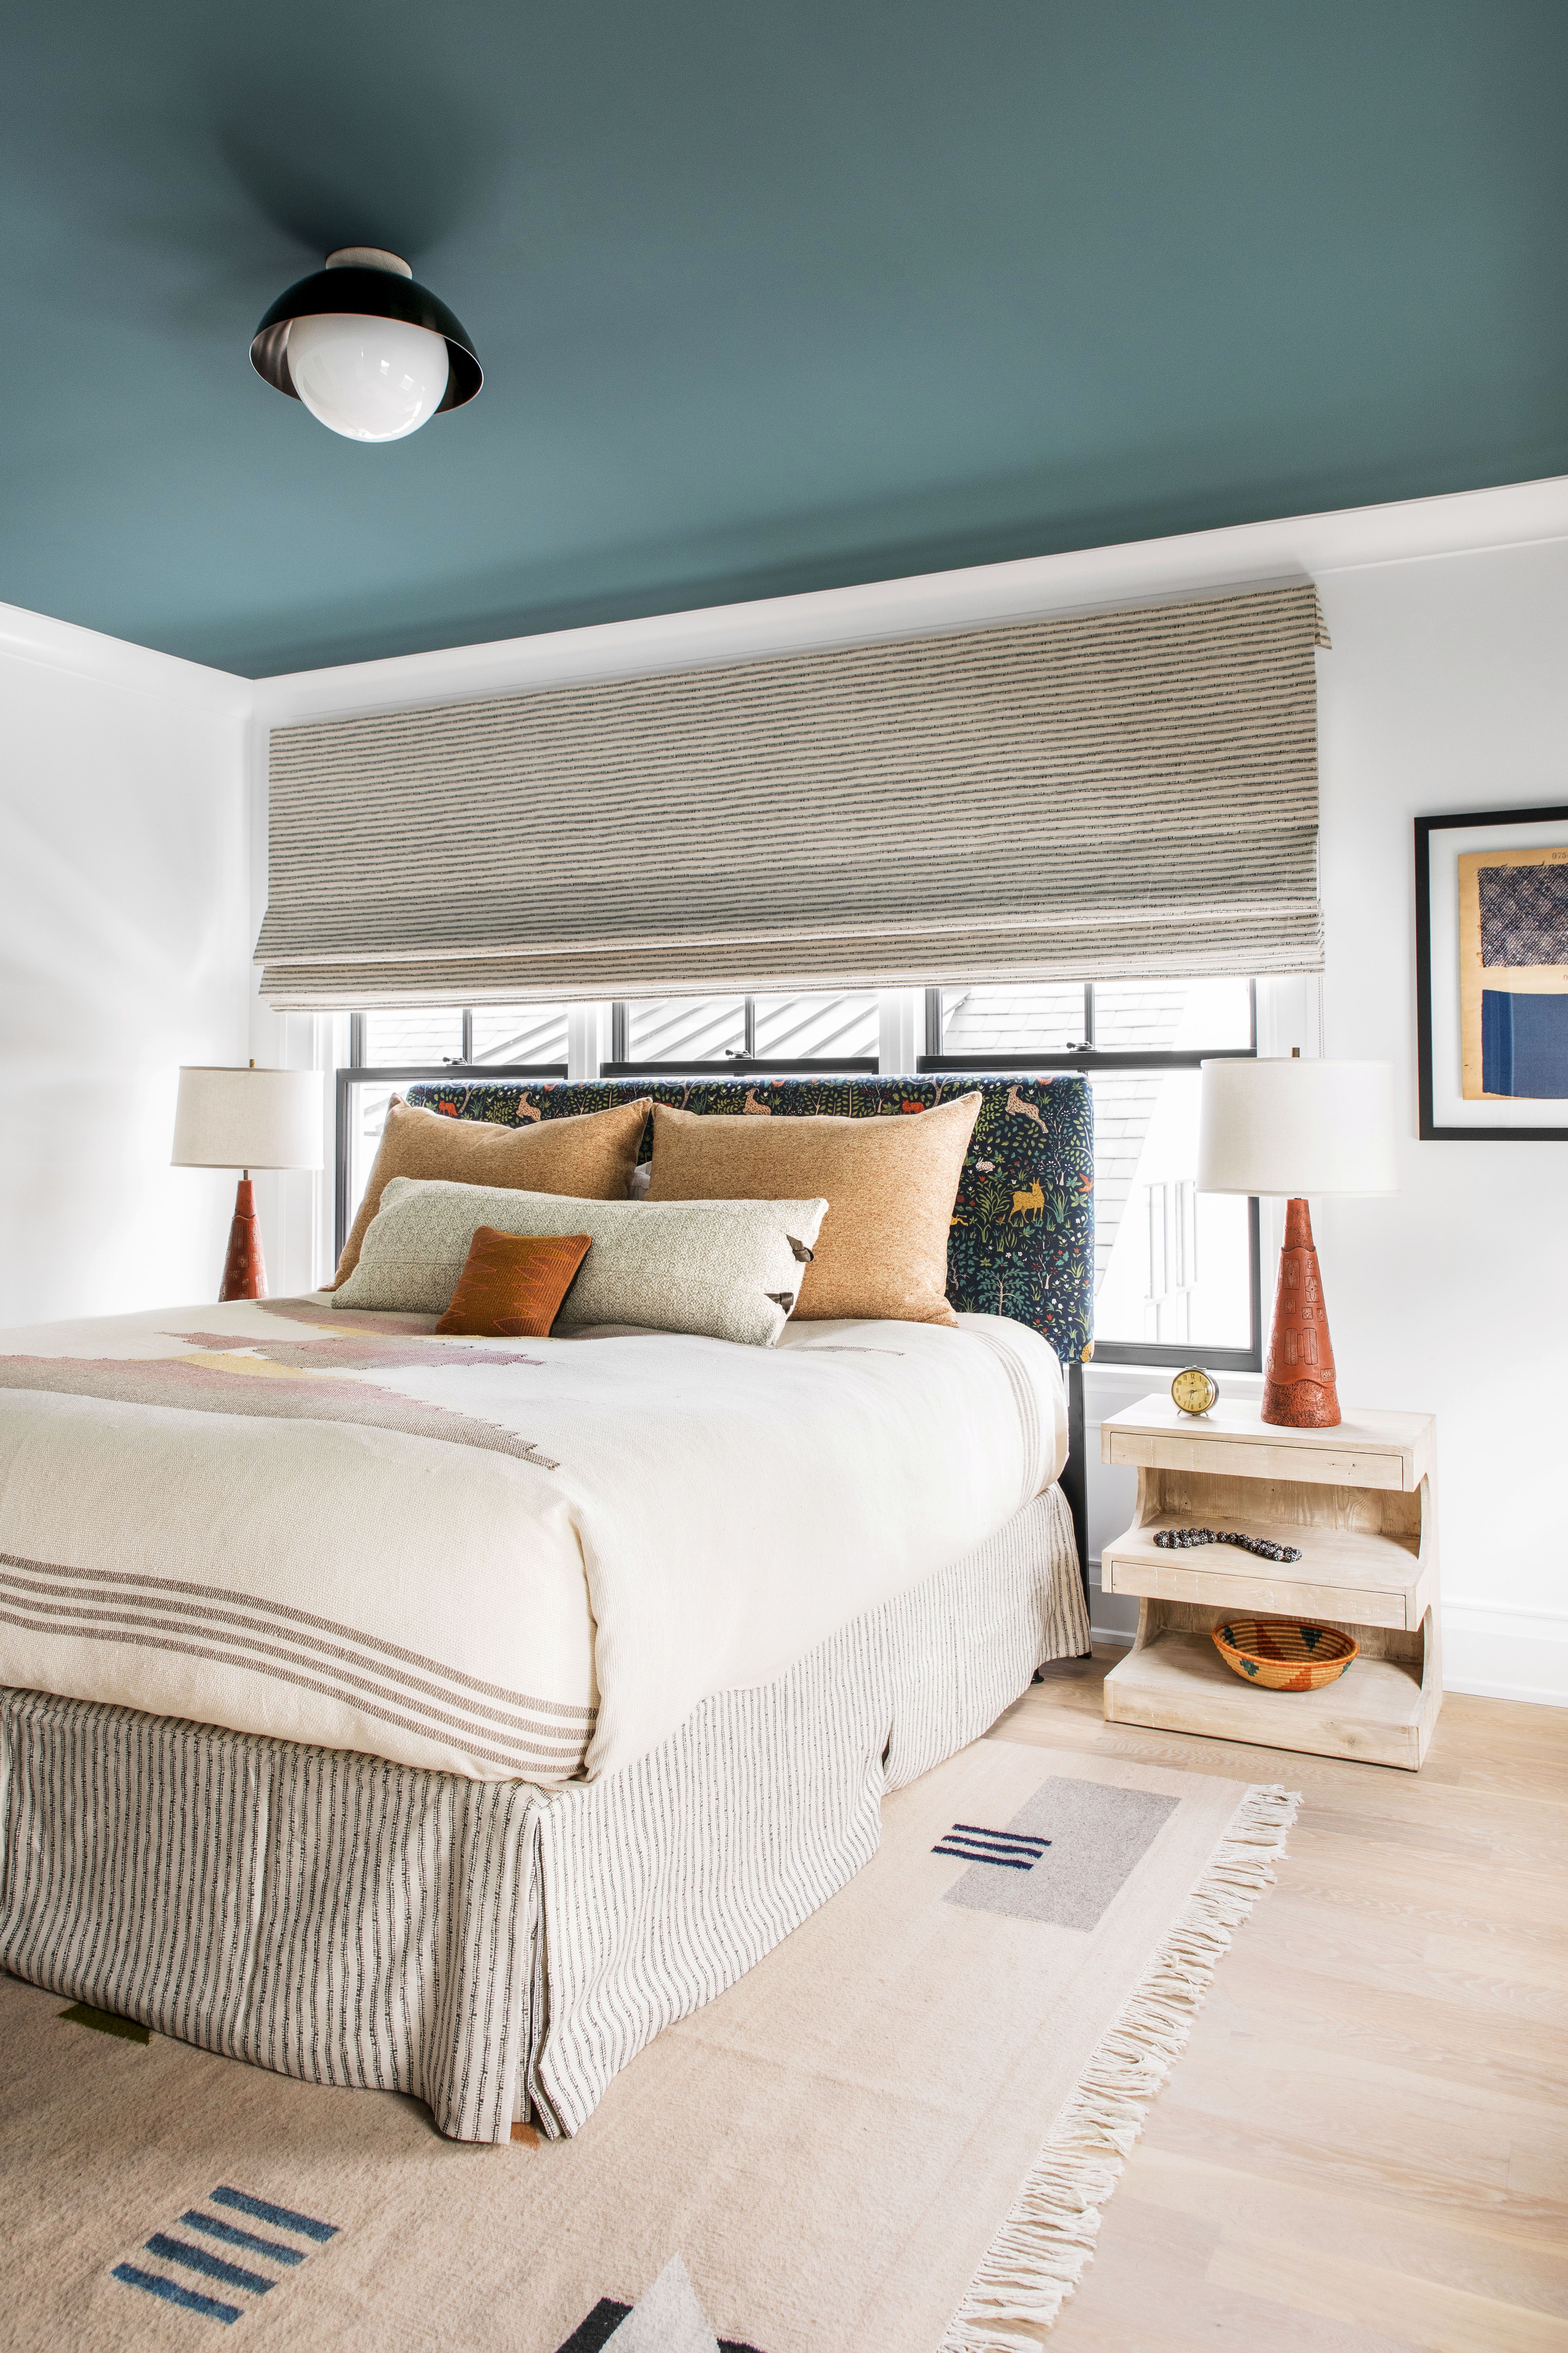 55 Easy Bedroom Makeover Ideas - DIY Master Bedroom Decor on a Budget